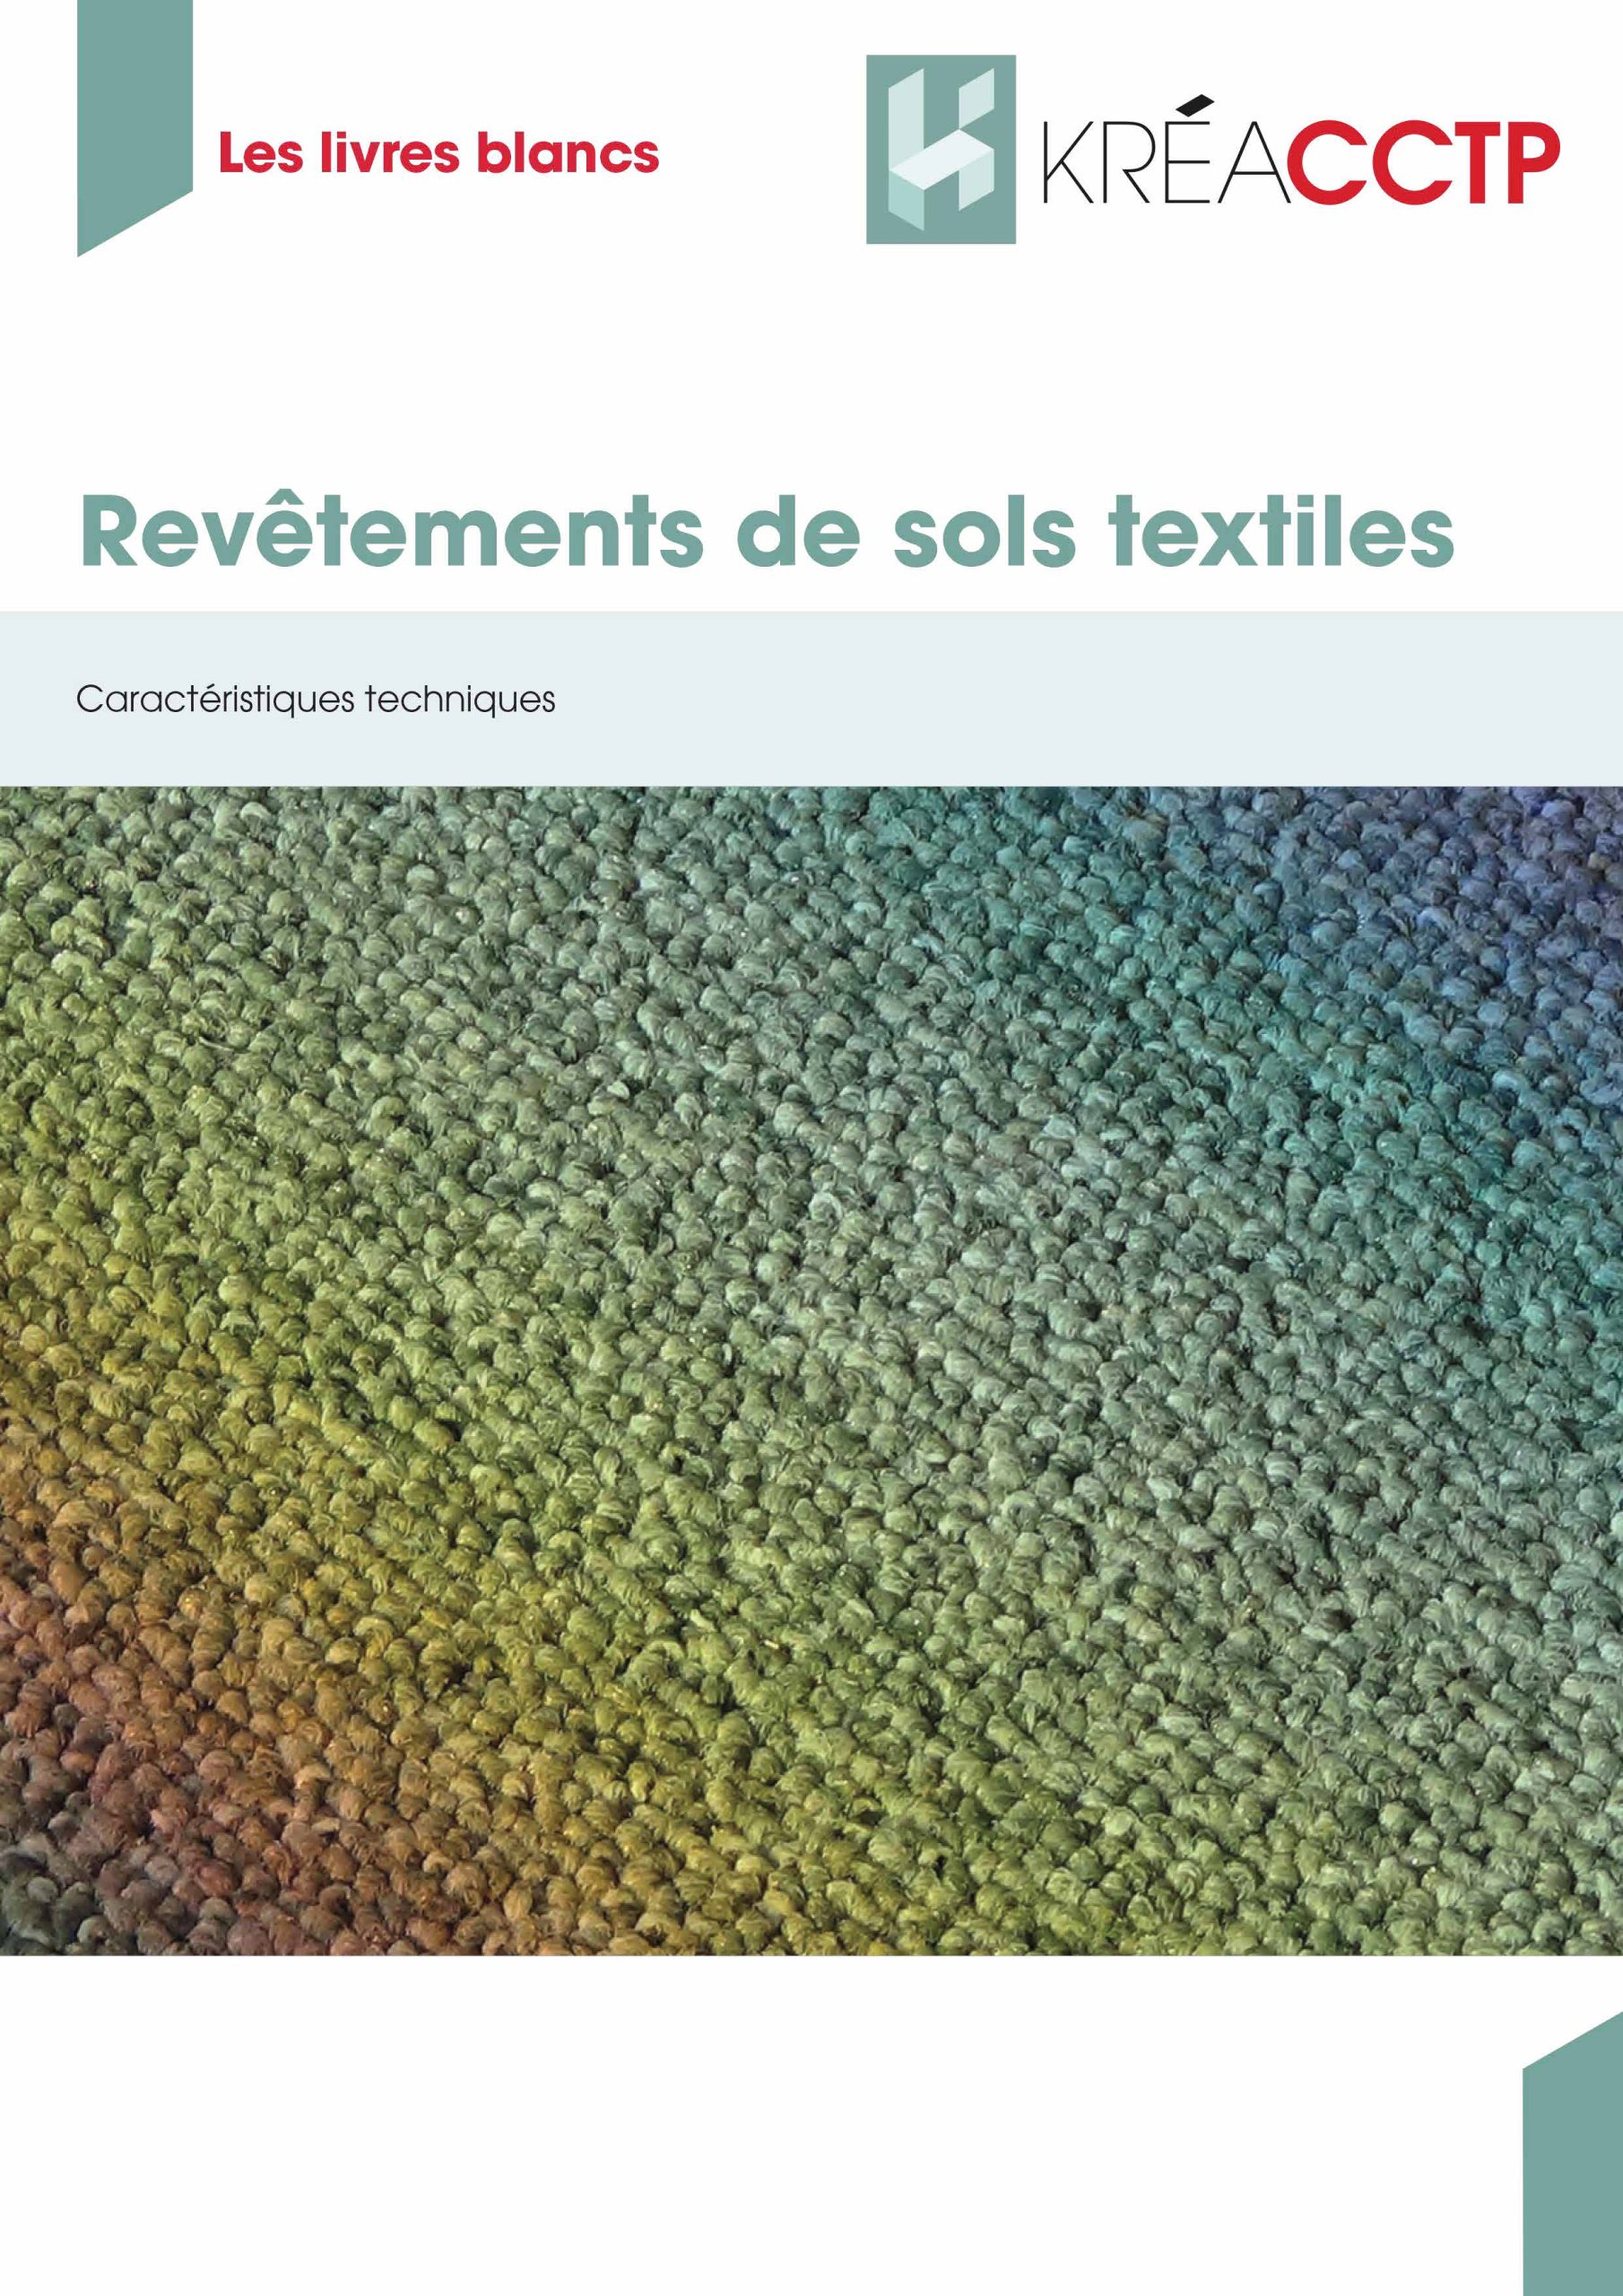 Revêtements de sols textiles - Caractéristiques techniques